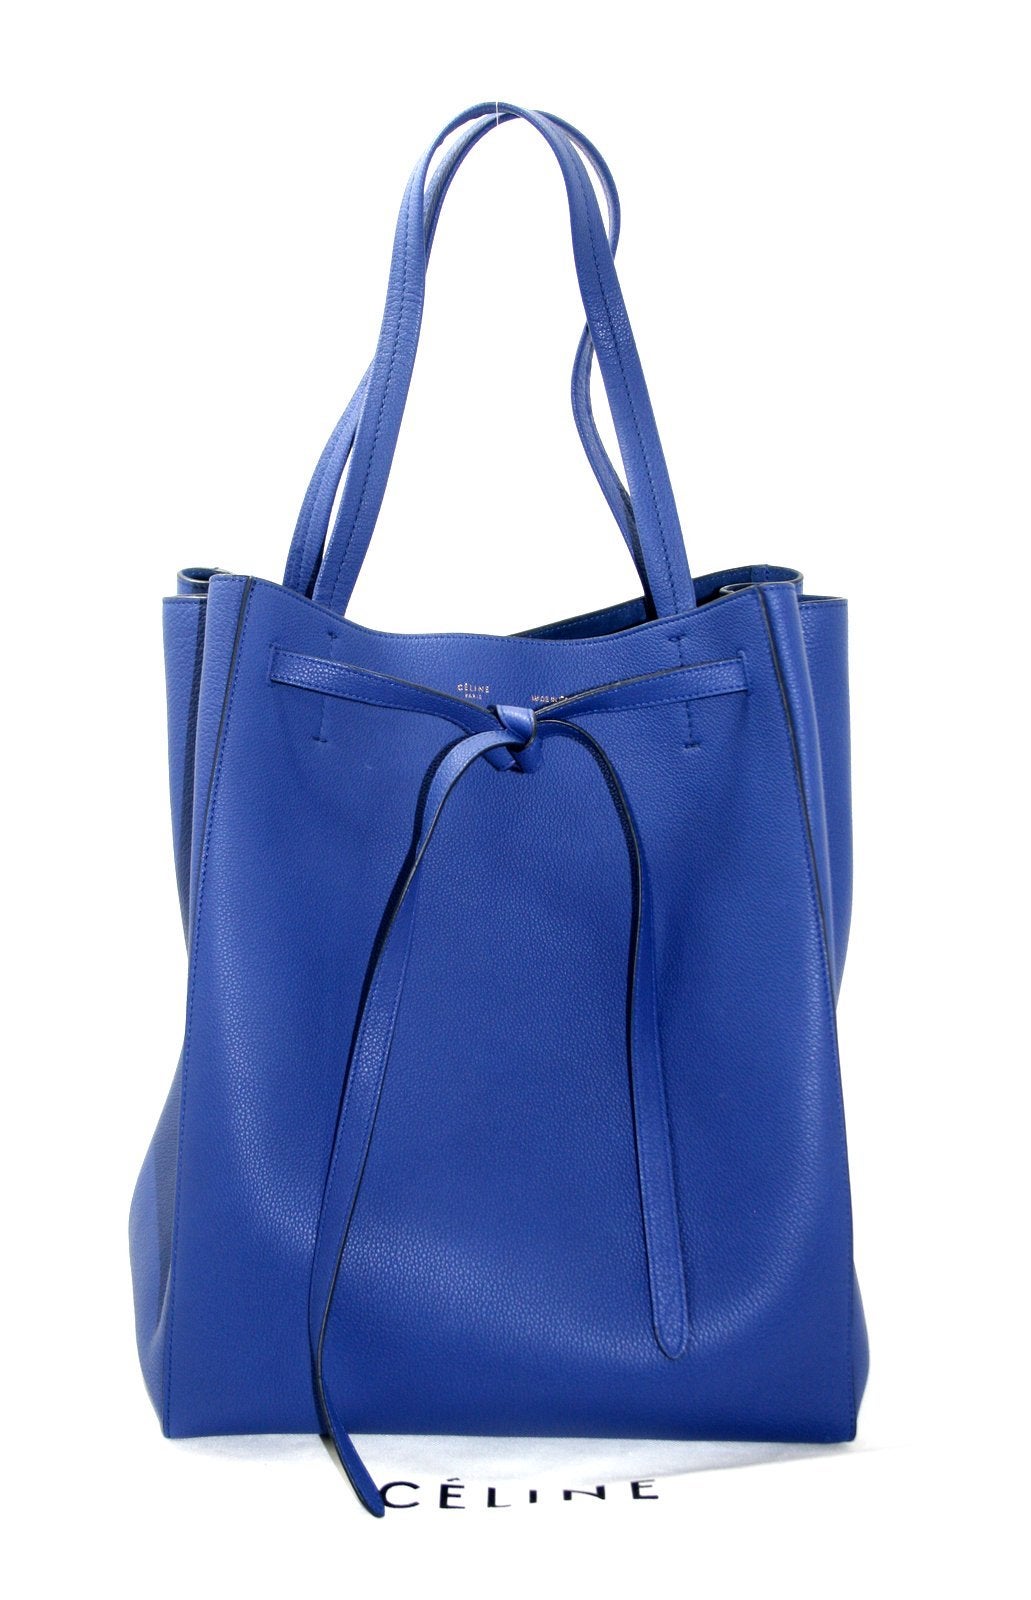 Celine Blue Leather Medium Cabas Phantom Tote Bag with Belt 4